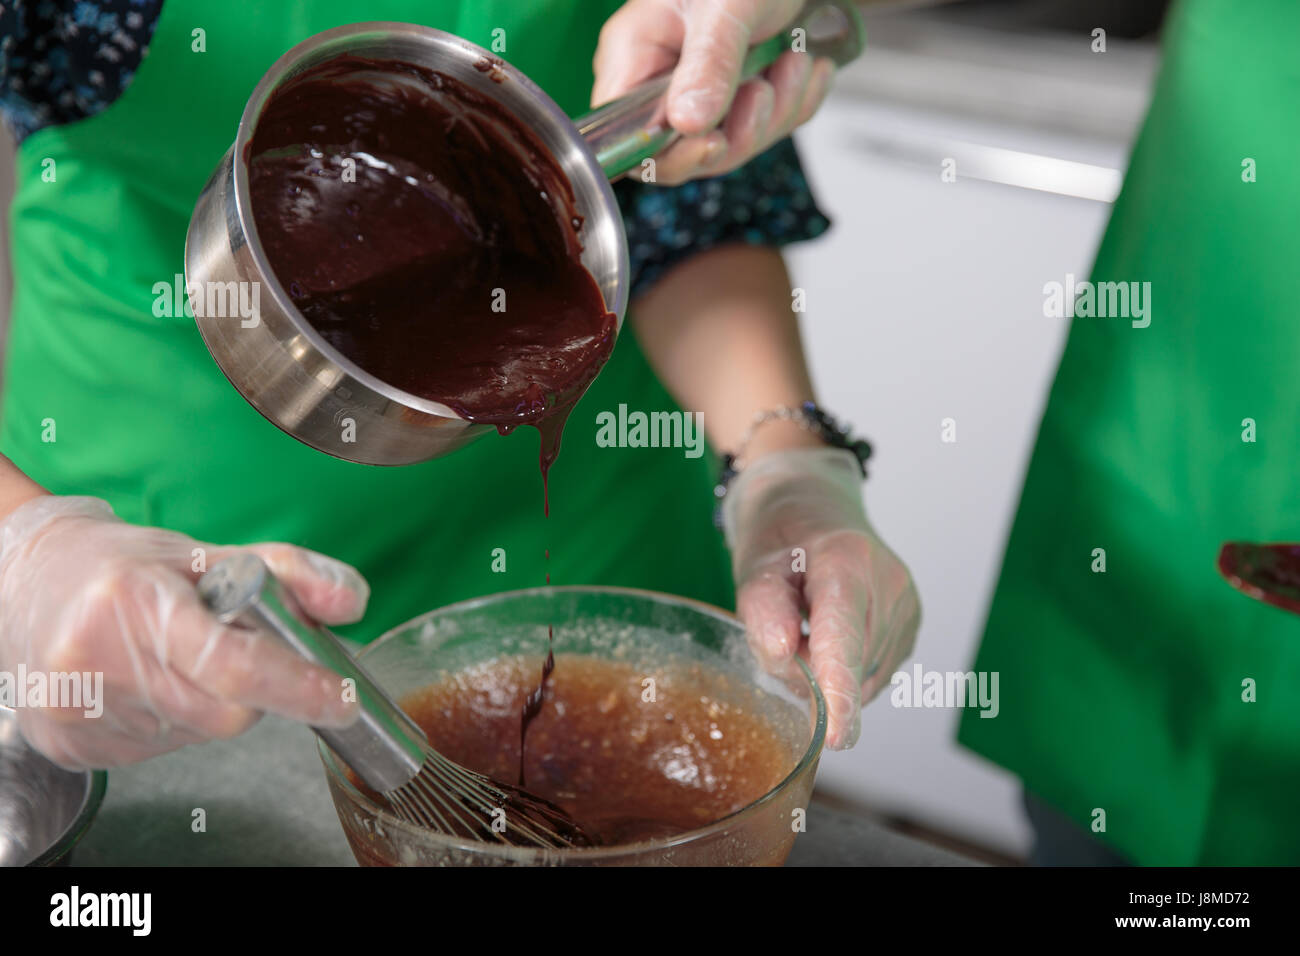 Preparing chocolate sauce for a chocolate cake Stock Photo